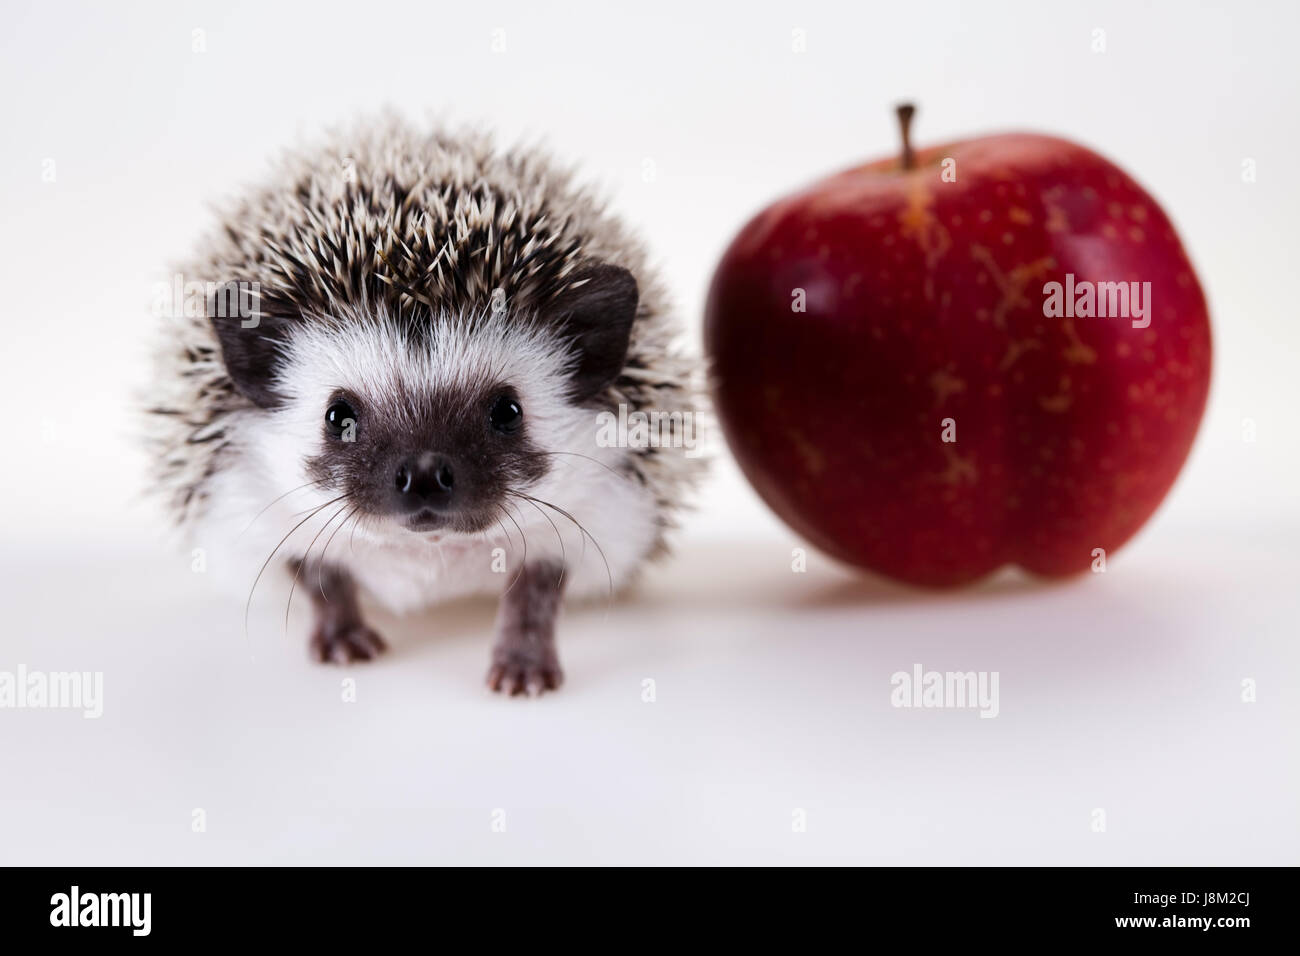 animal, mammal, creature, predator, hedgehog, nature, fall, autumn, profile, Stock Photo